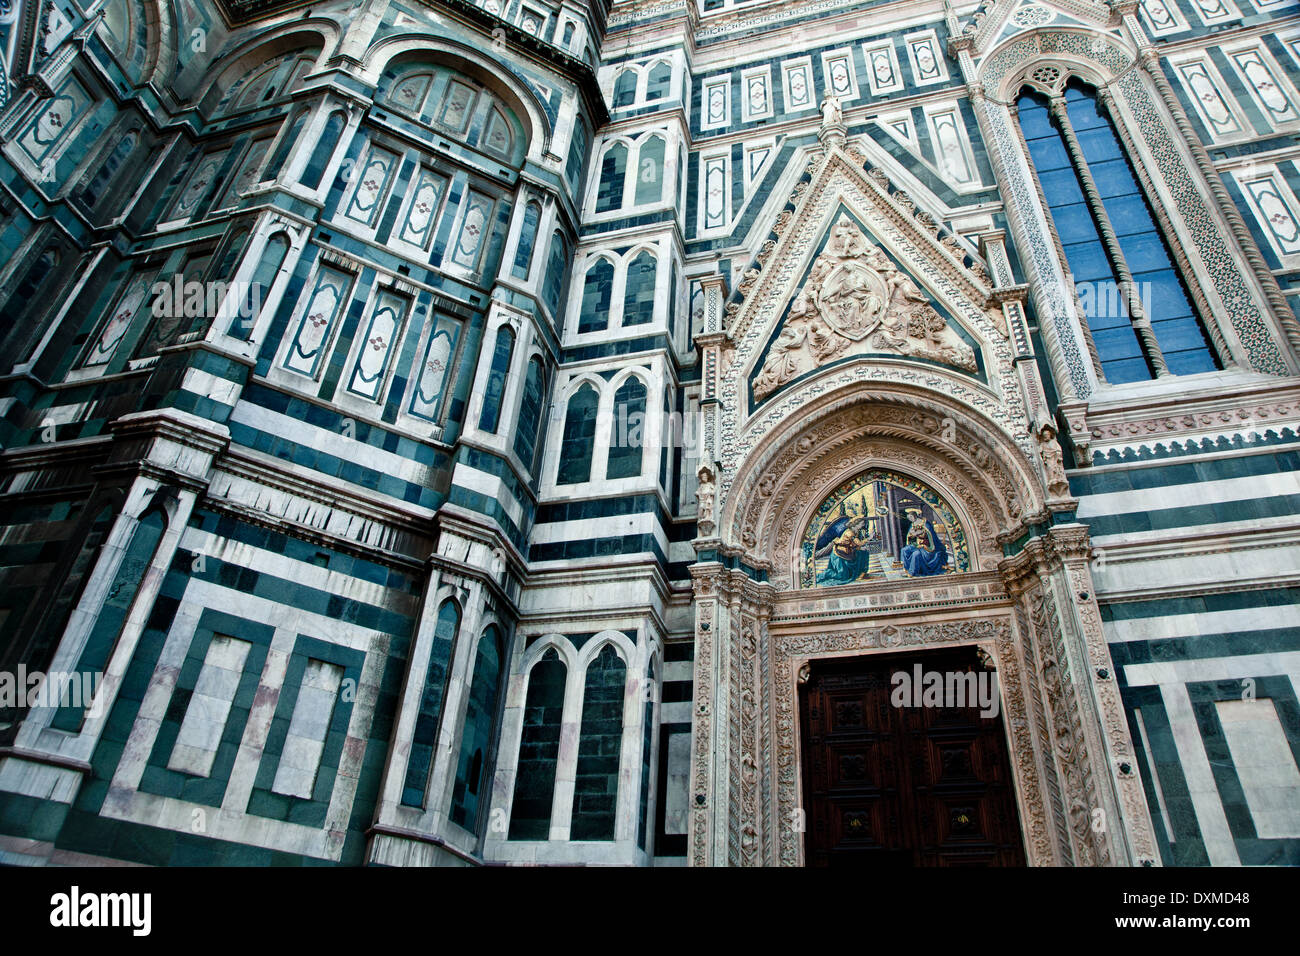 Door of the Mandorla and Marble facade of the Basilica di Santa Maria del Fiore, Piazza del Duomo, Florence, Firenze, Italy Stock Photo